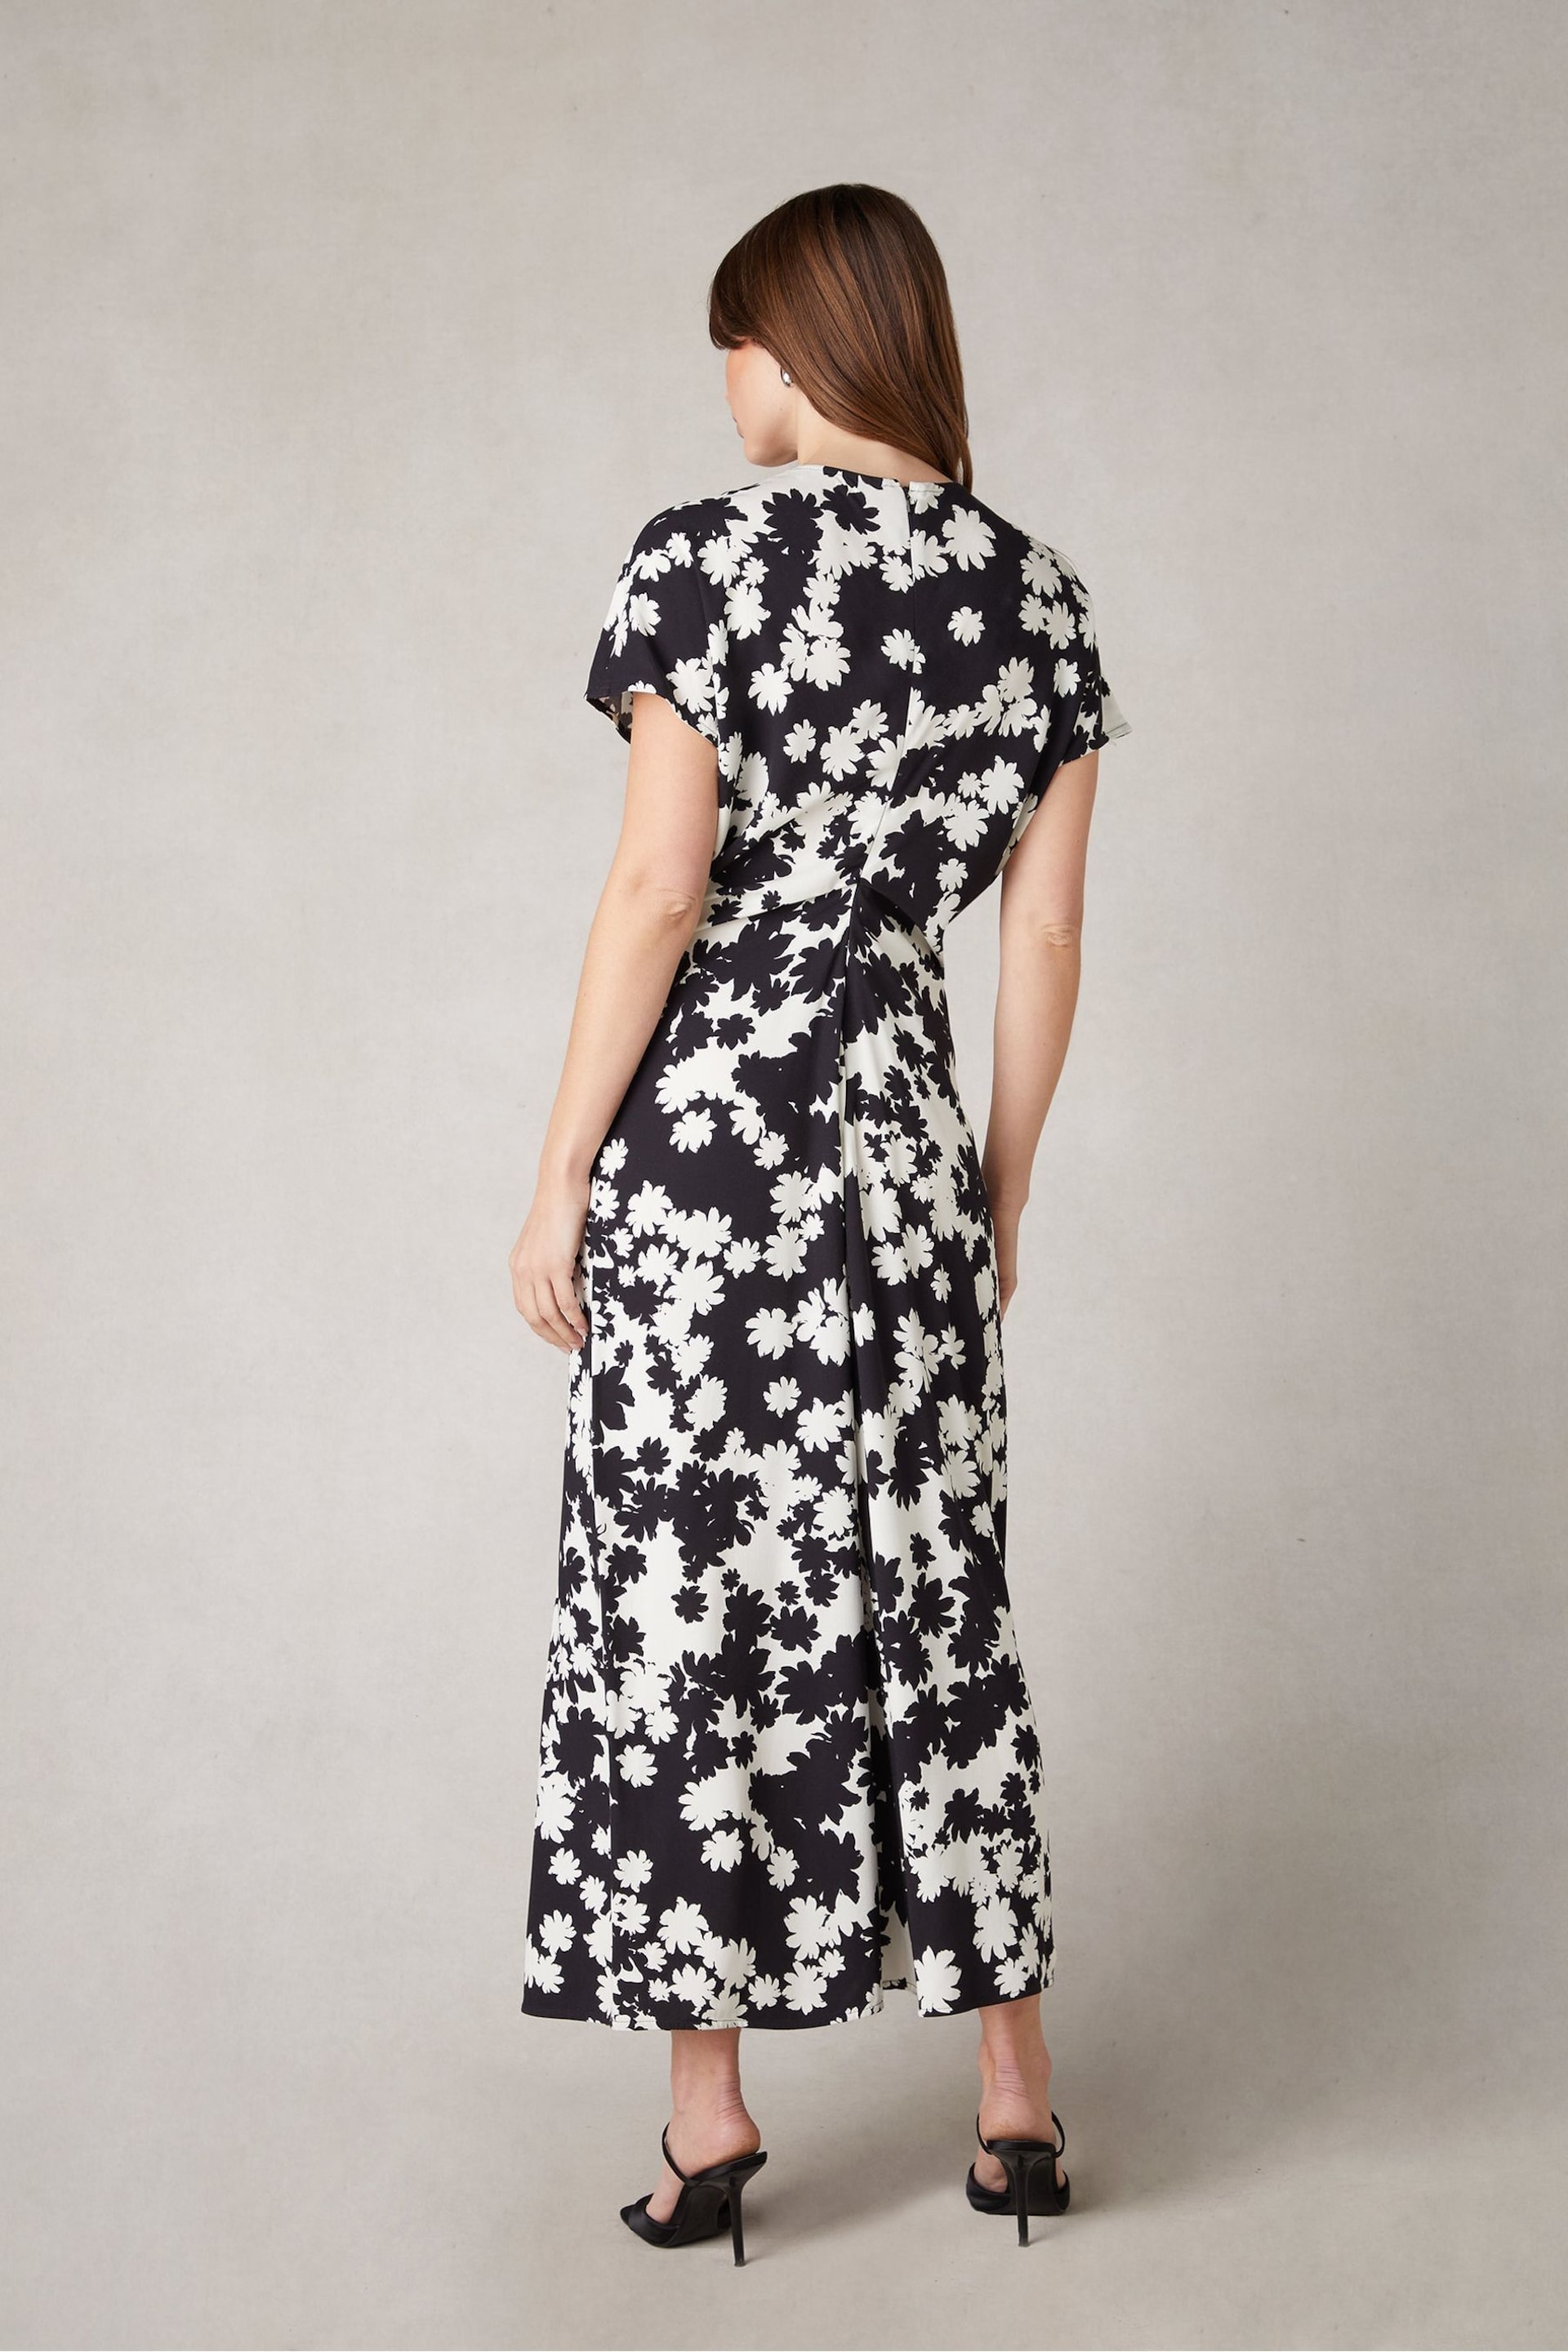 Ro&Zo Harper Mono Floral Print Flutter Sleeve Midaxi Dress - Image 5 of 7